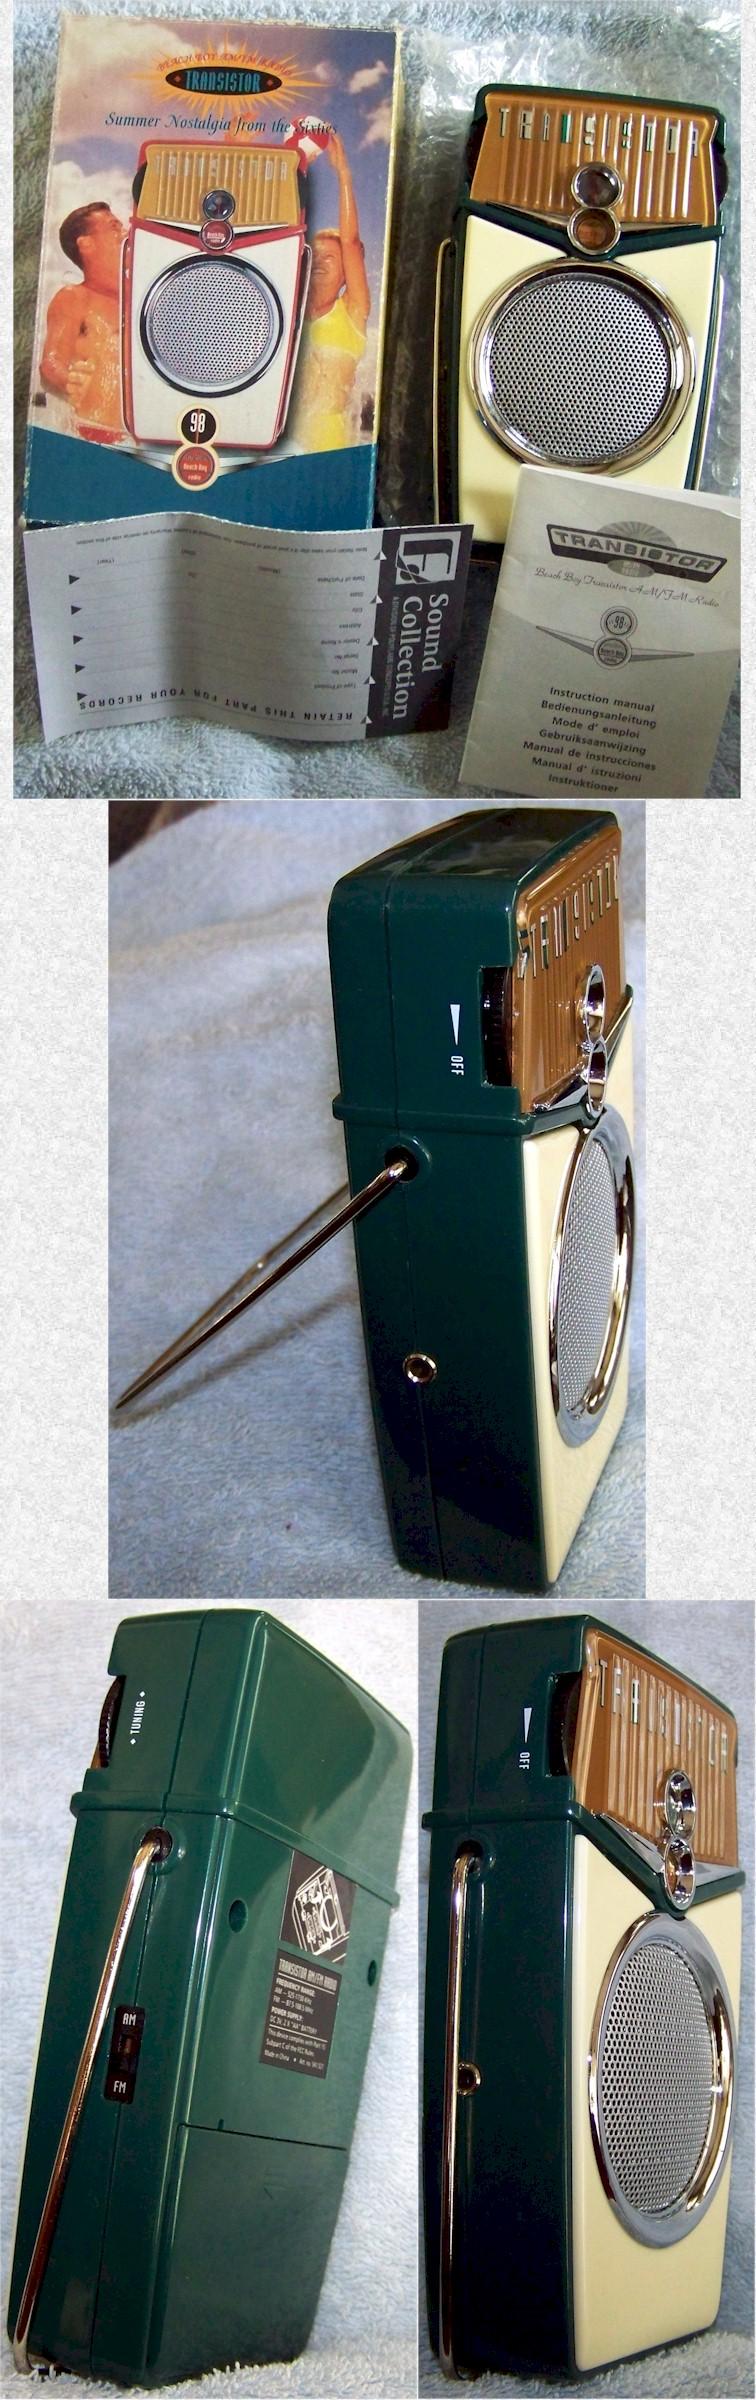 Beach Boy Replica Pocket Transistor (1990s)